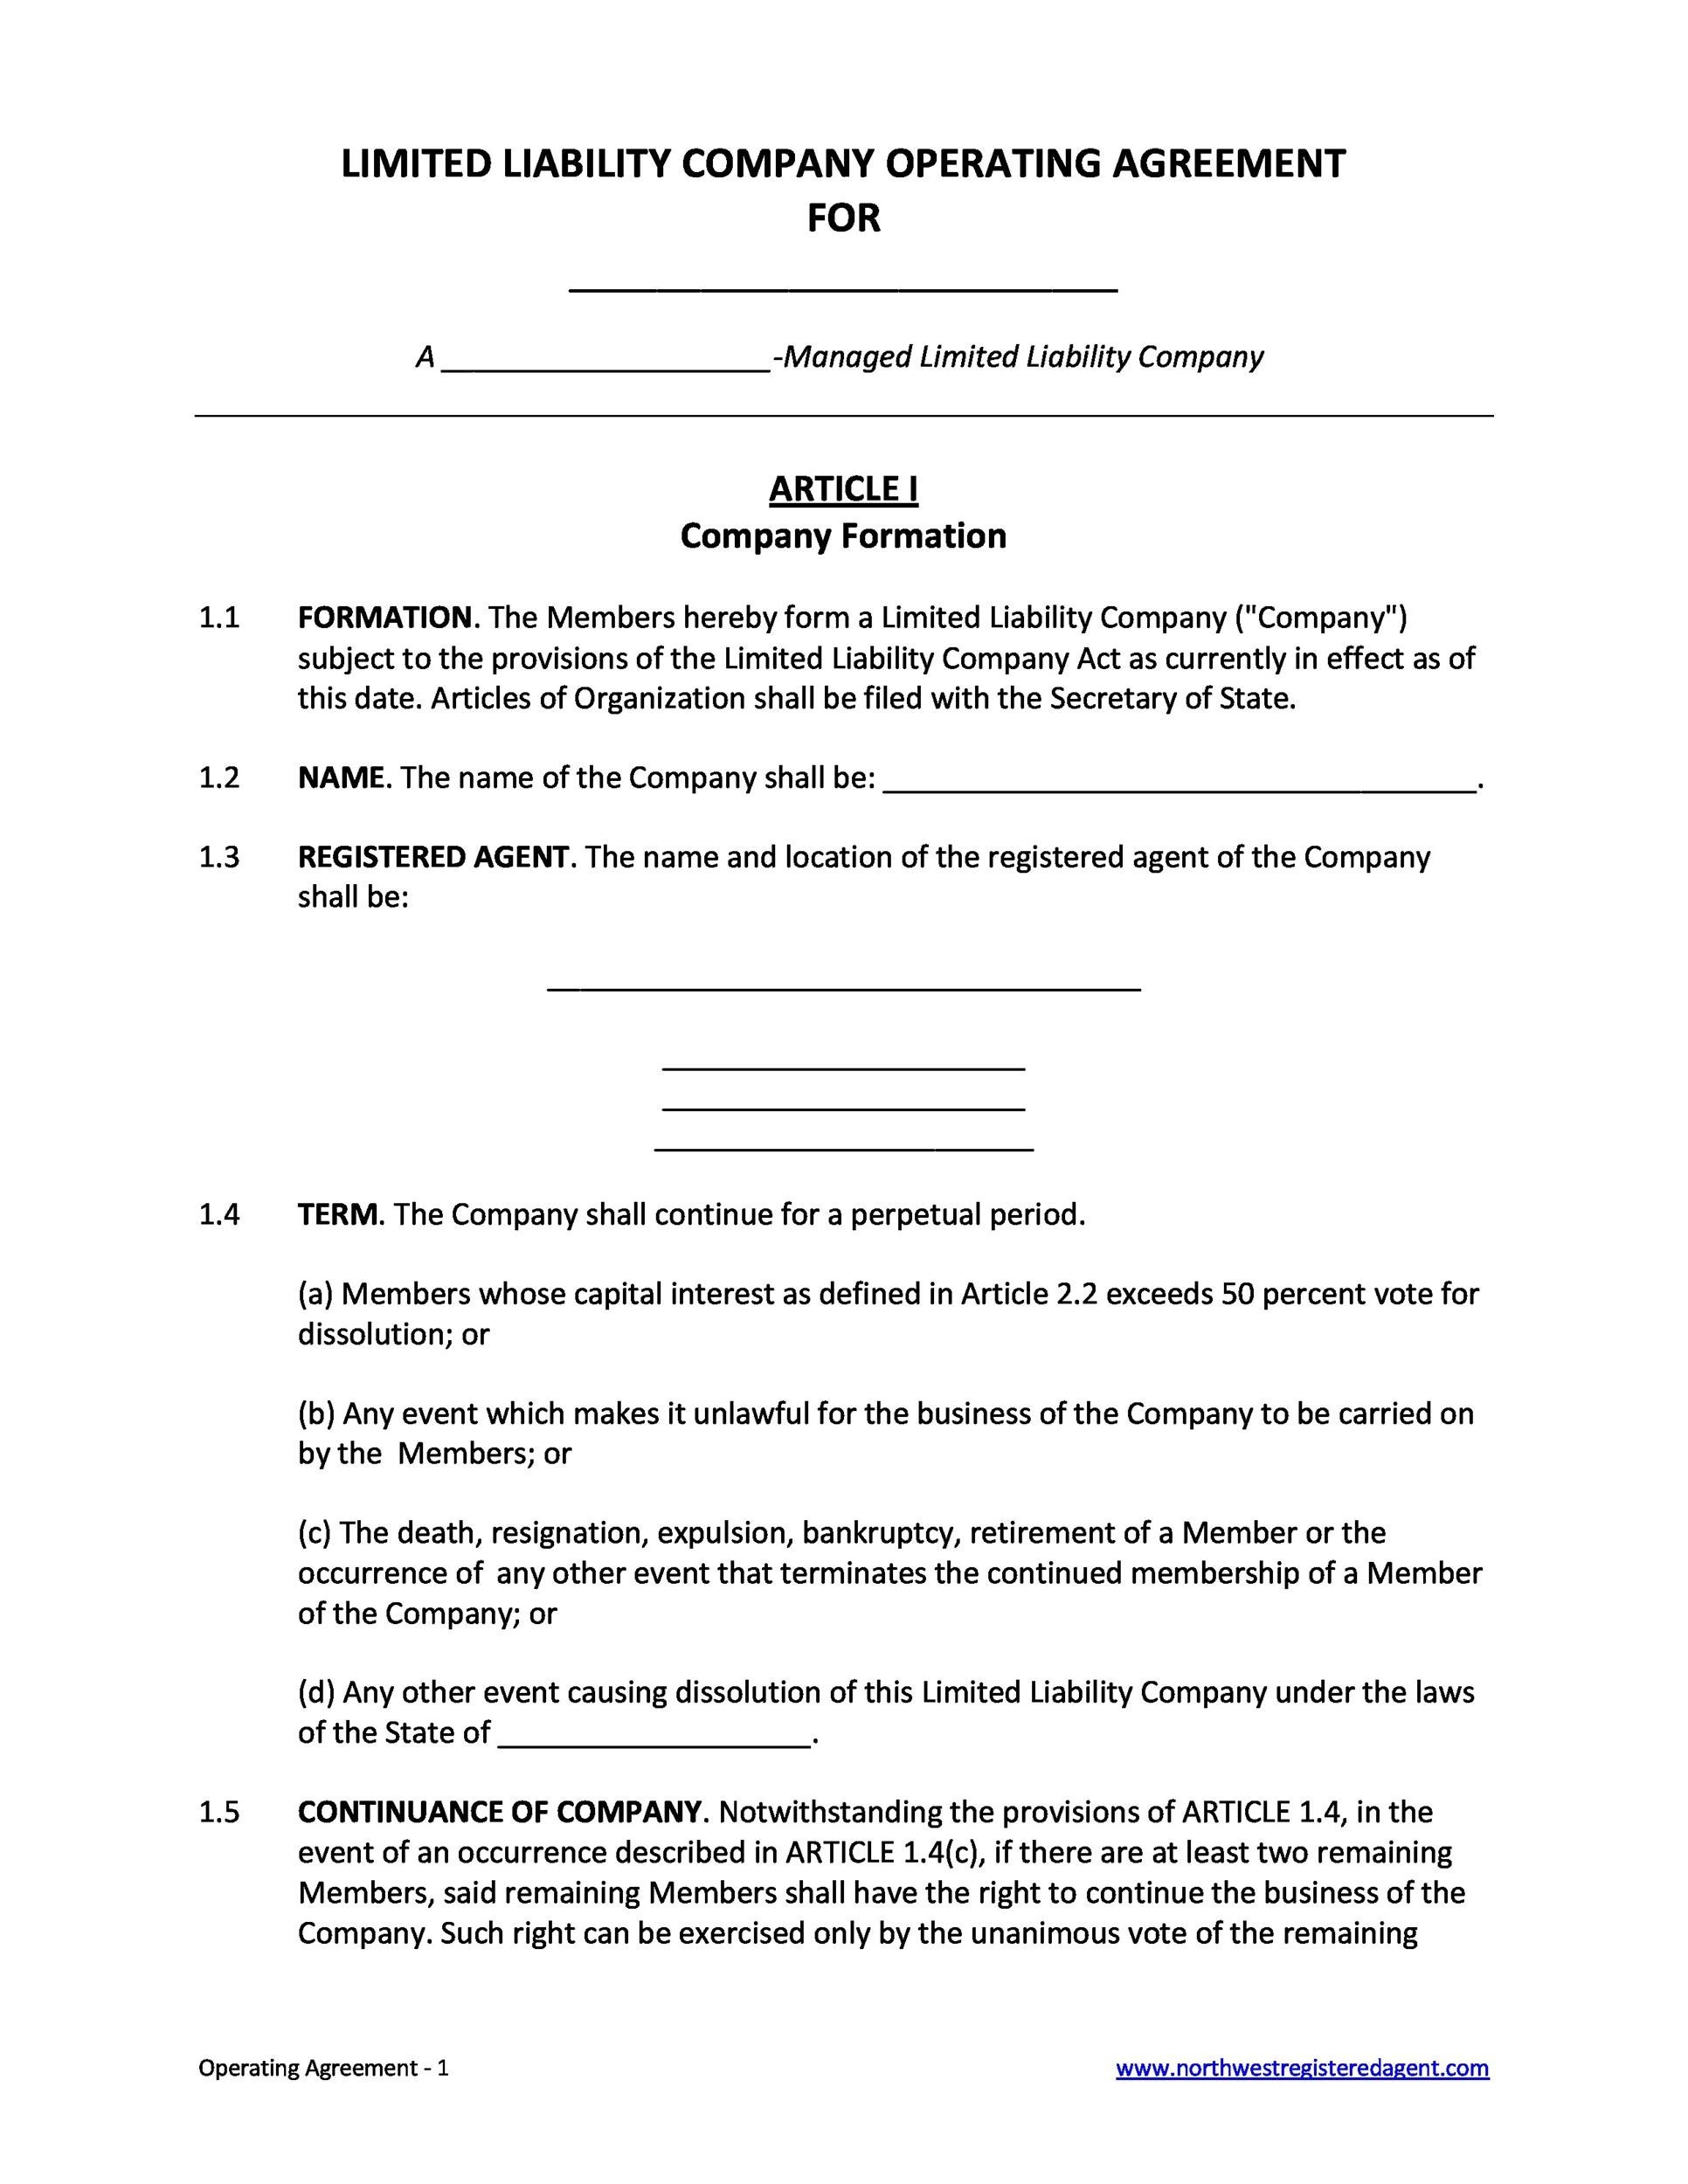 30 Professional LLC Operating Agreement Templates ᐅ TemplateLab